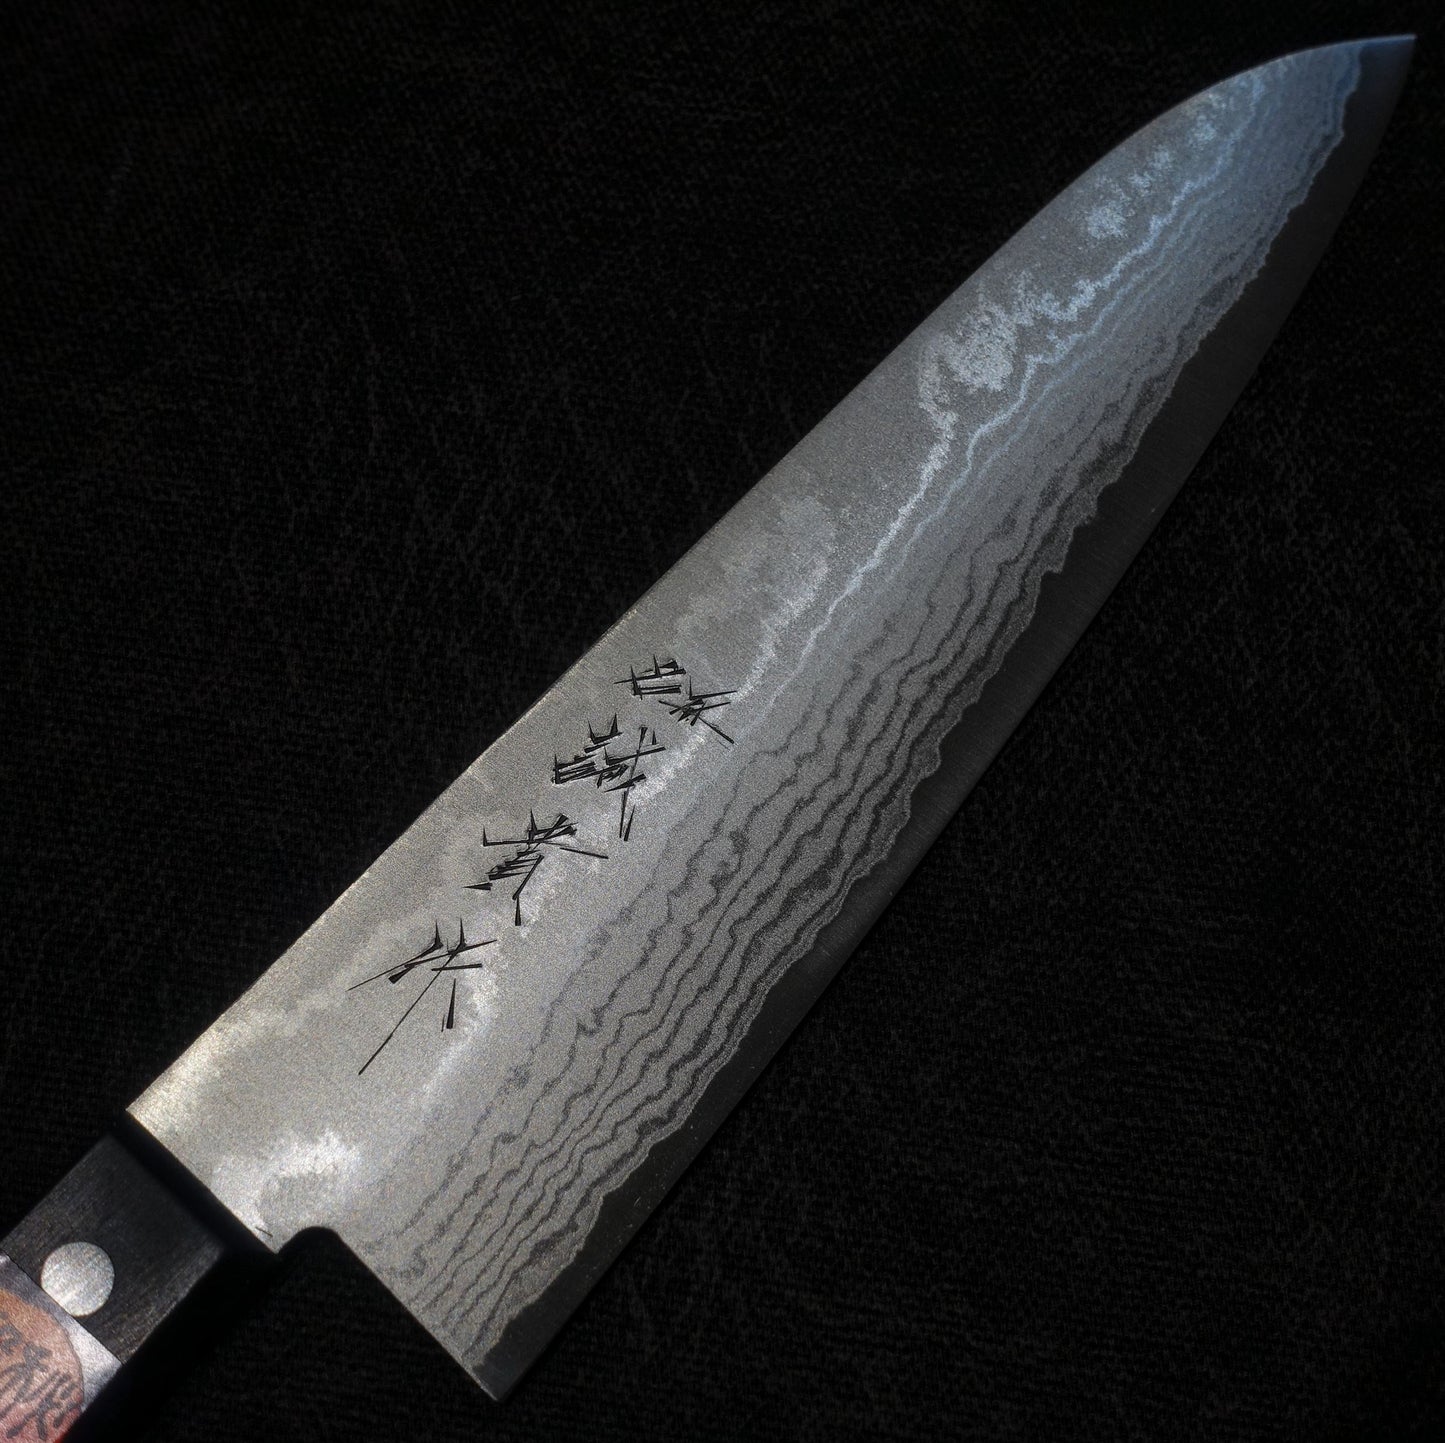 Shigeki Tanaka VG10 damascus 190mm gyuto - Zahocho Japanese Knives